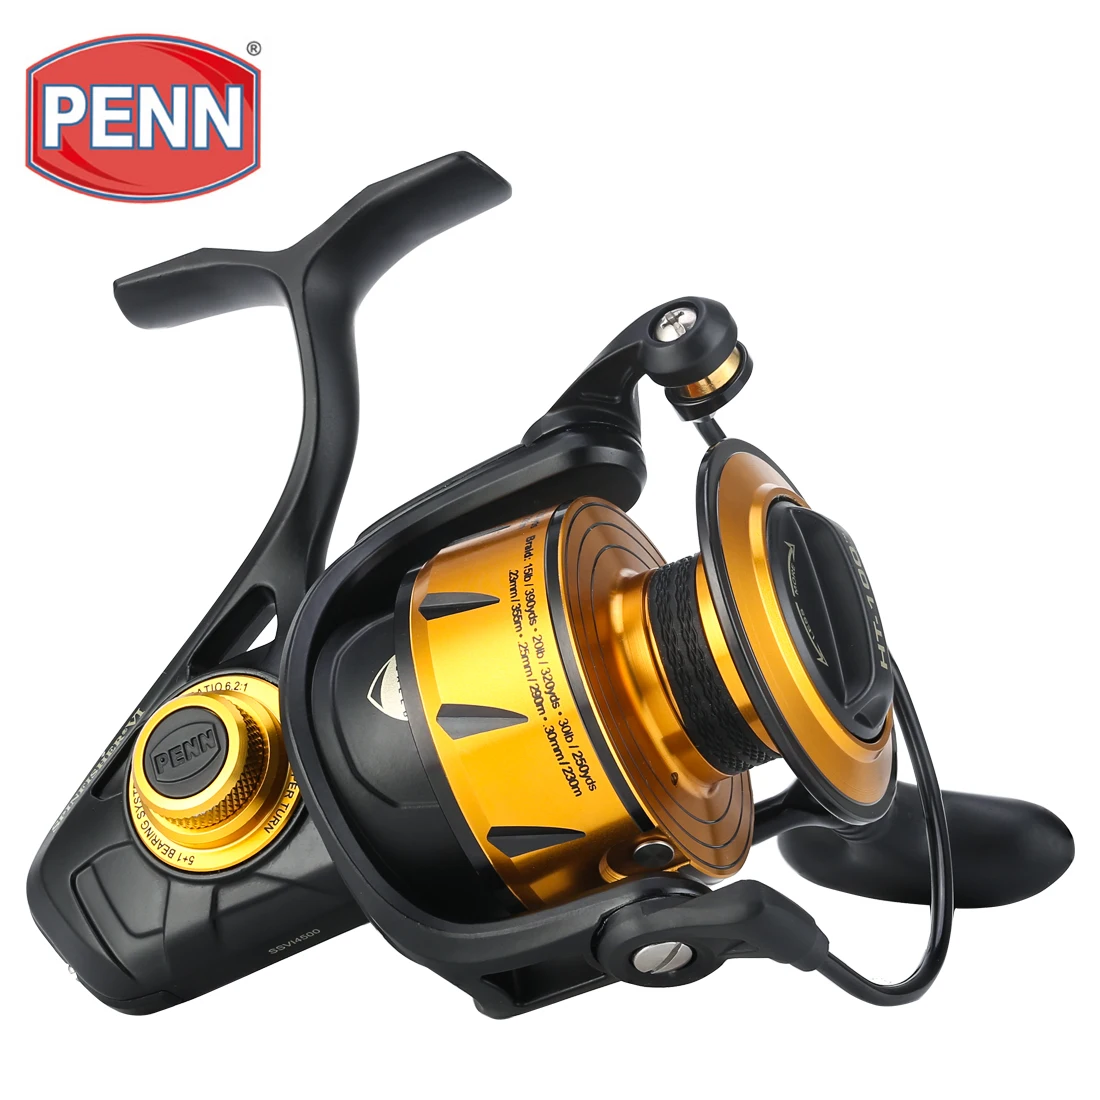 100% Original Penn Spinfisher Vi Ssvi 2500 - 10500 Full Metal Body  Saltwater Spinning Fishing Reel - Buy Penn Spinfisher V Penn Spinfisher  Ssvi 2500 